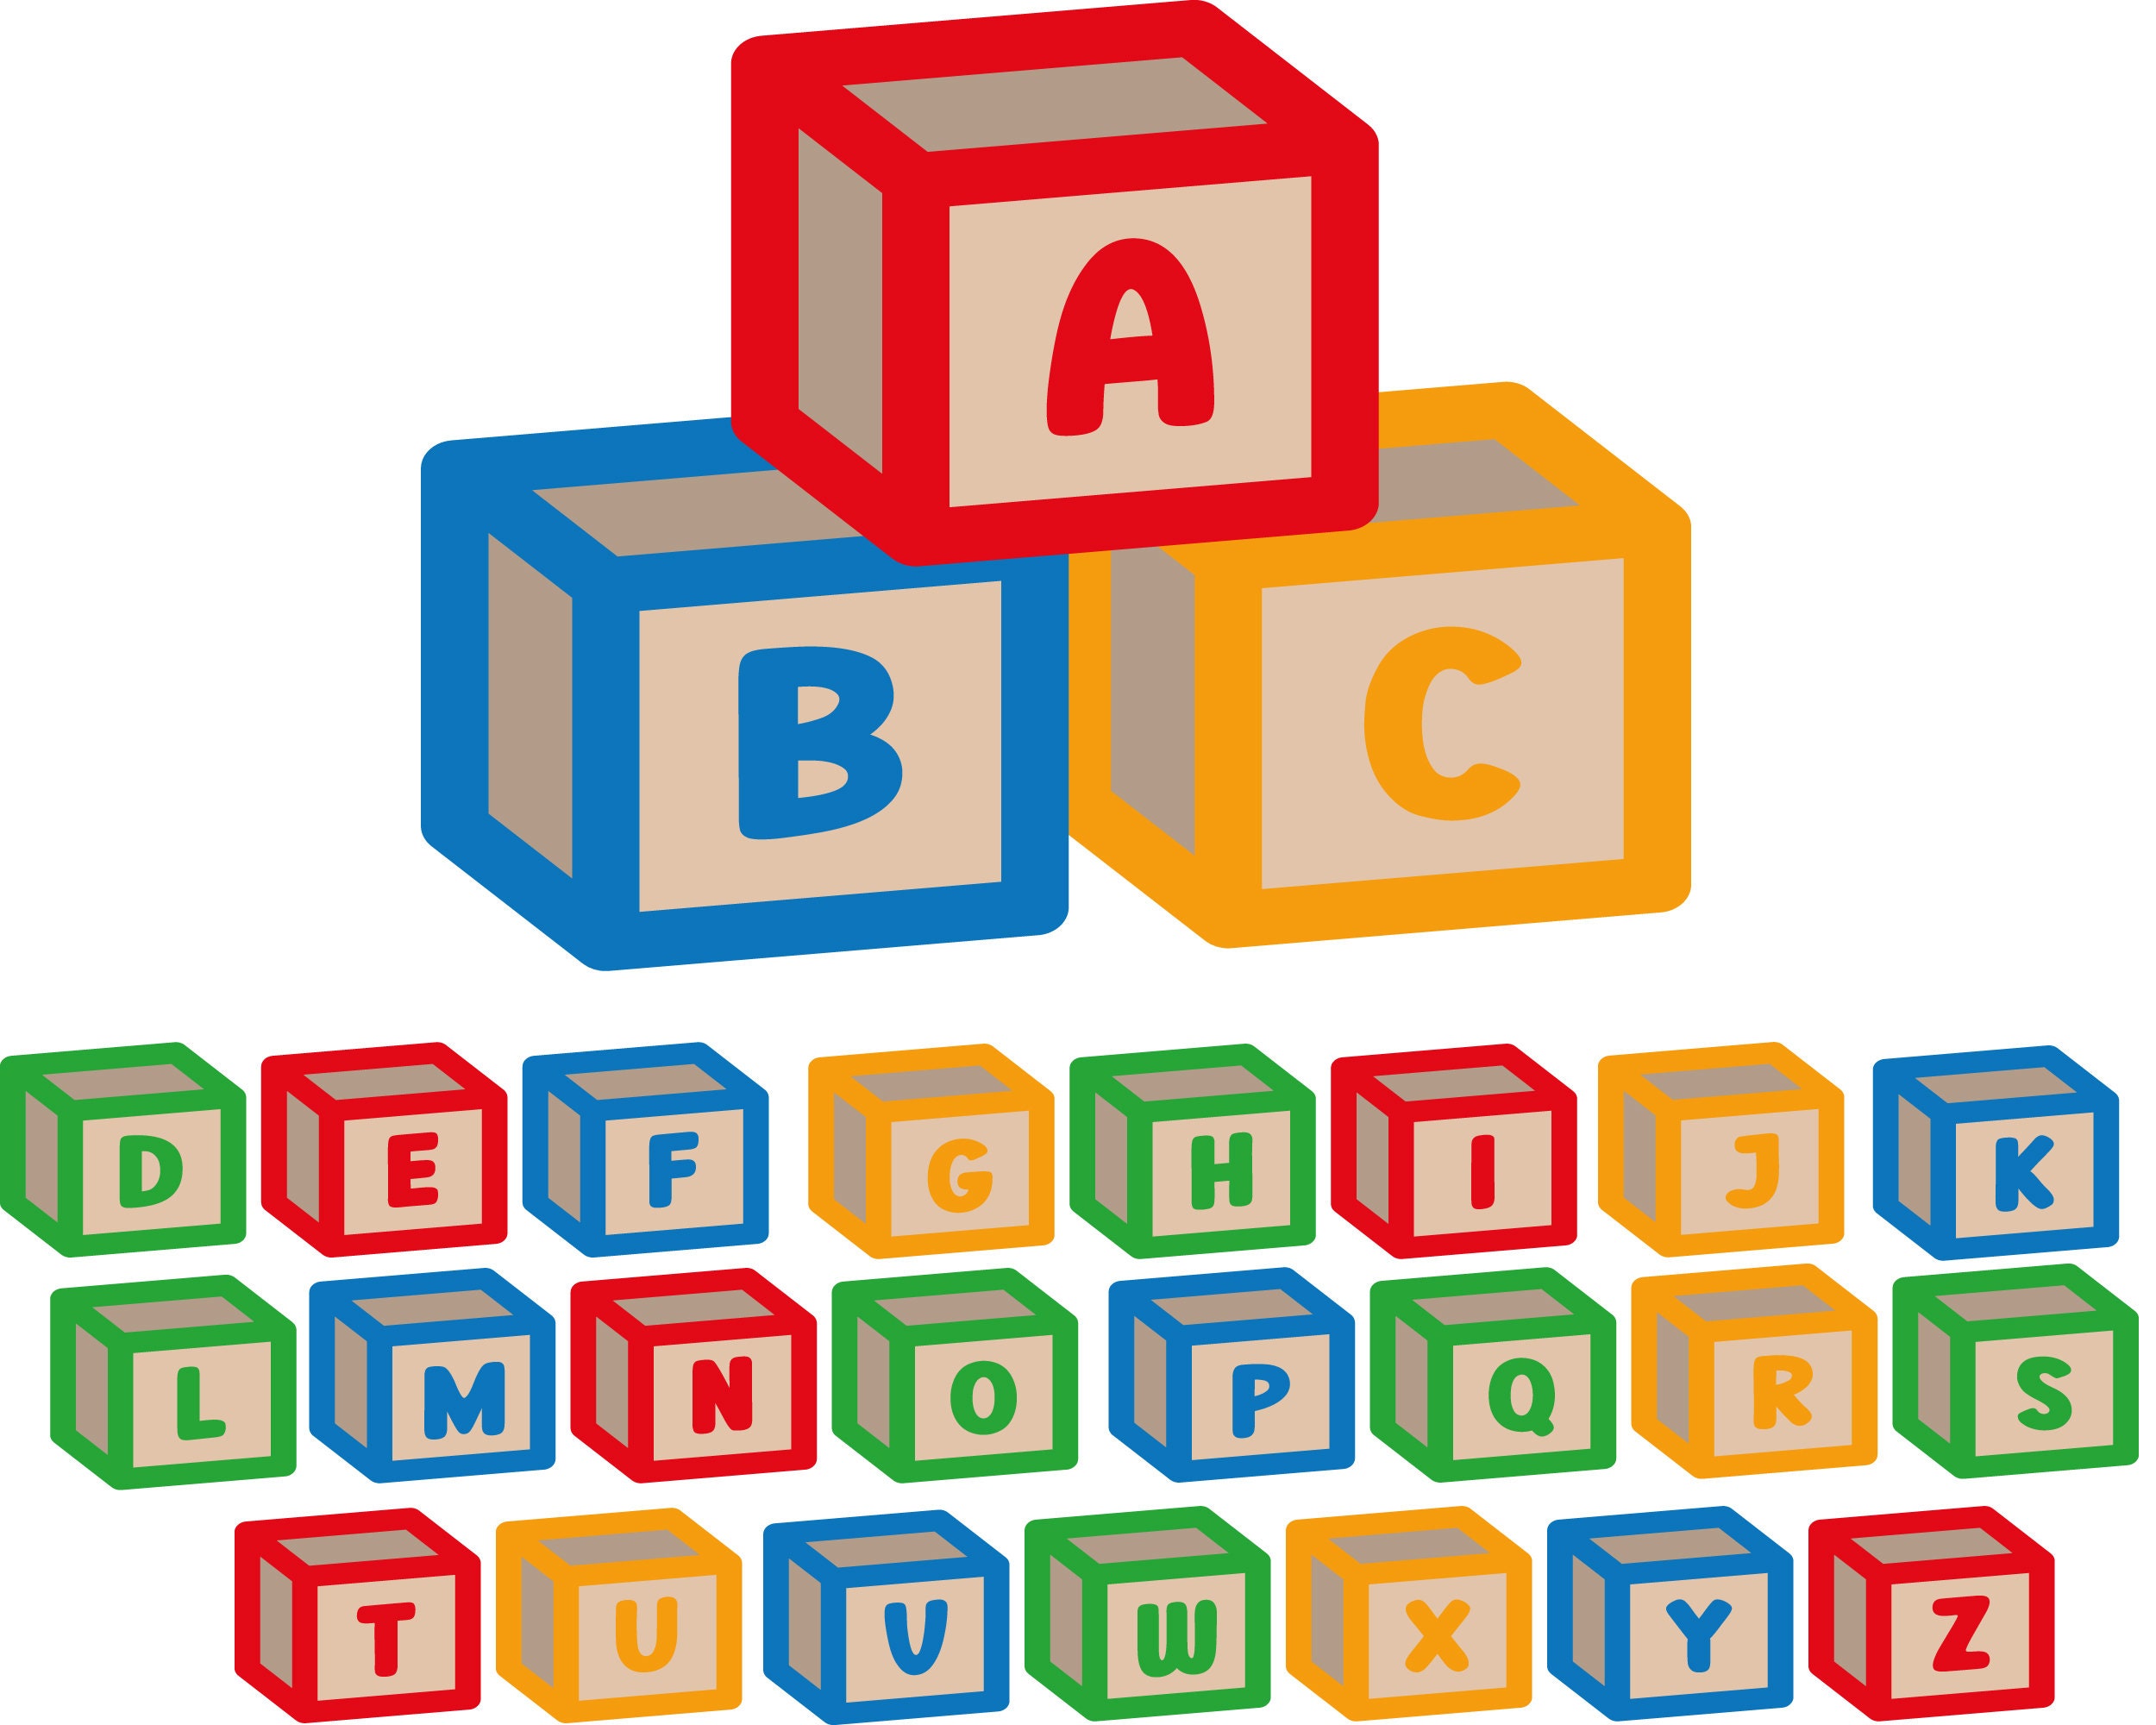 Alphabet Blocks Svg, Numbers Blocks Svg, Building Blocks, Baby Blocks,  Letter Blocks. Vector Cut file Cricut, Silhouette, Pdf Png Eps Dxf.